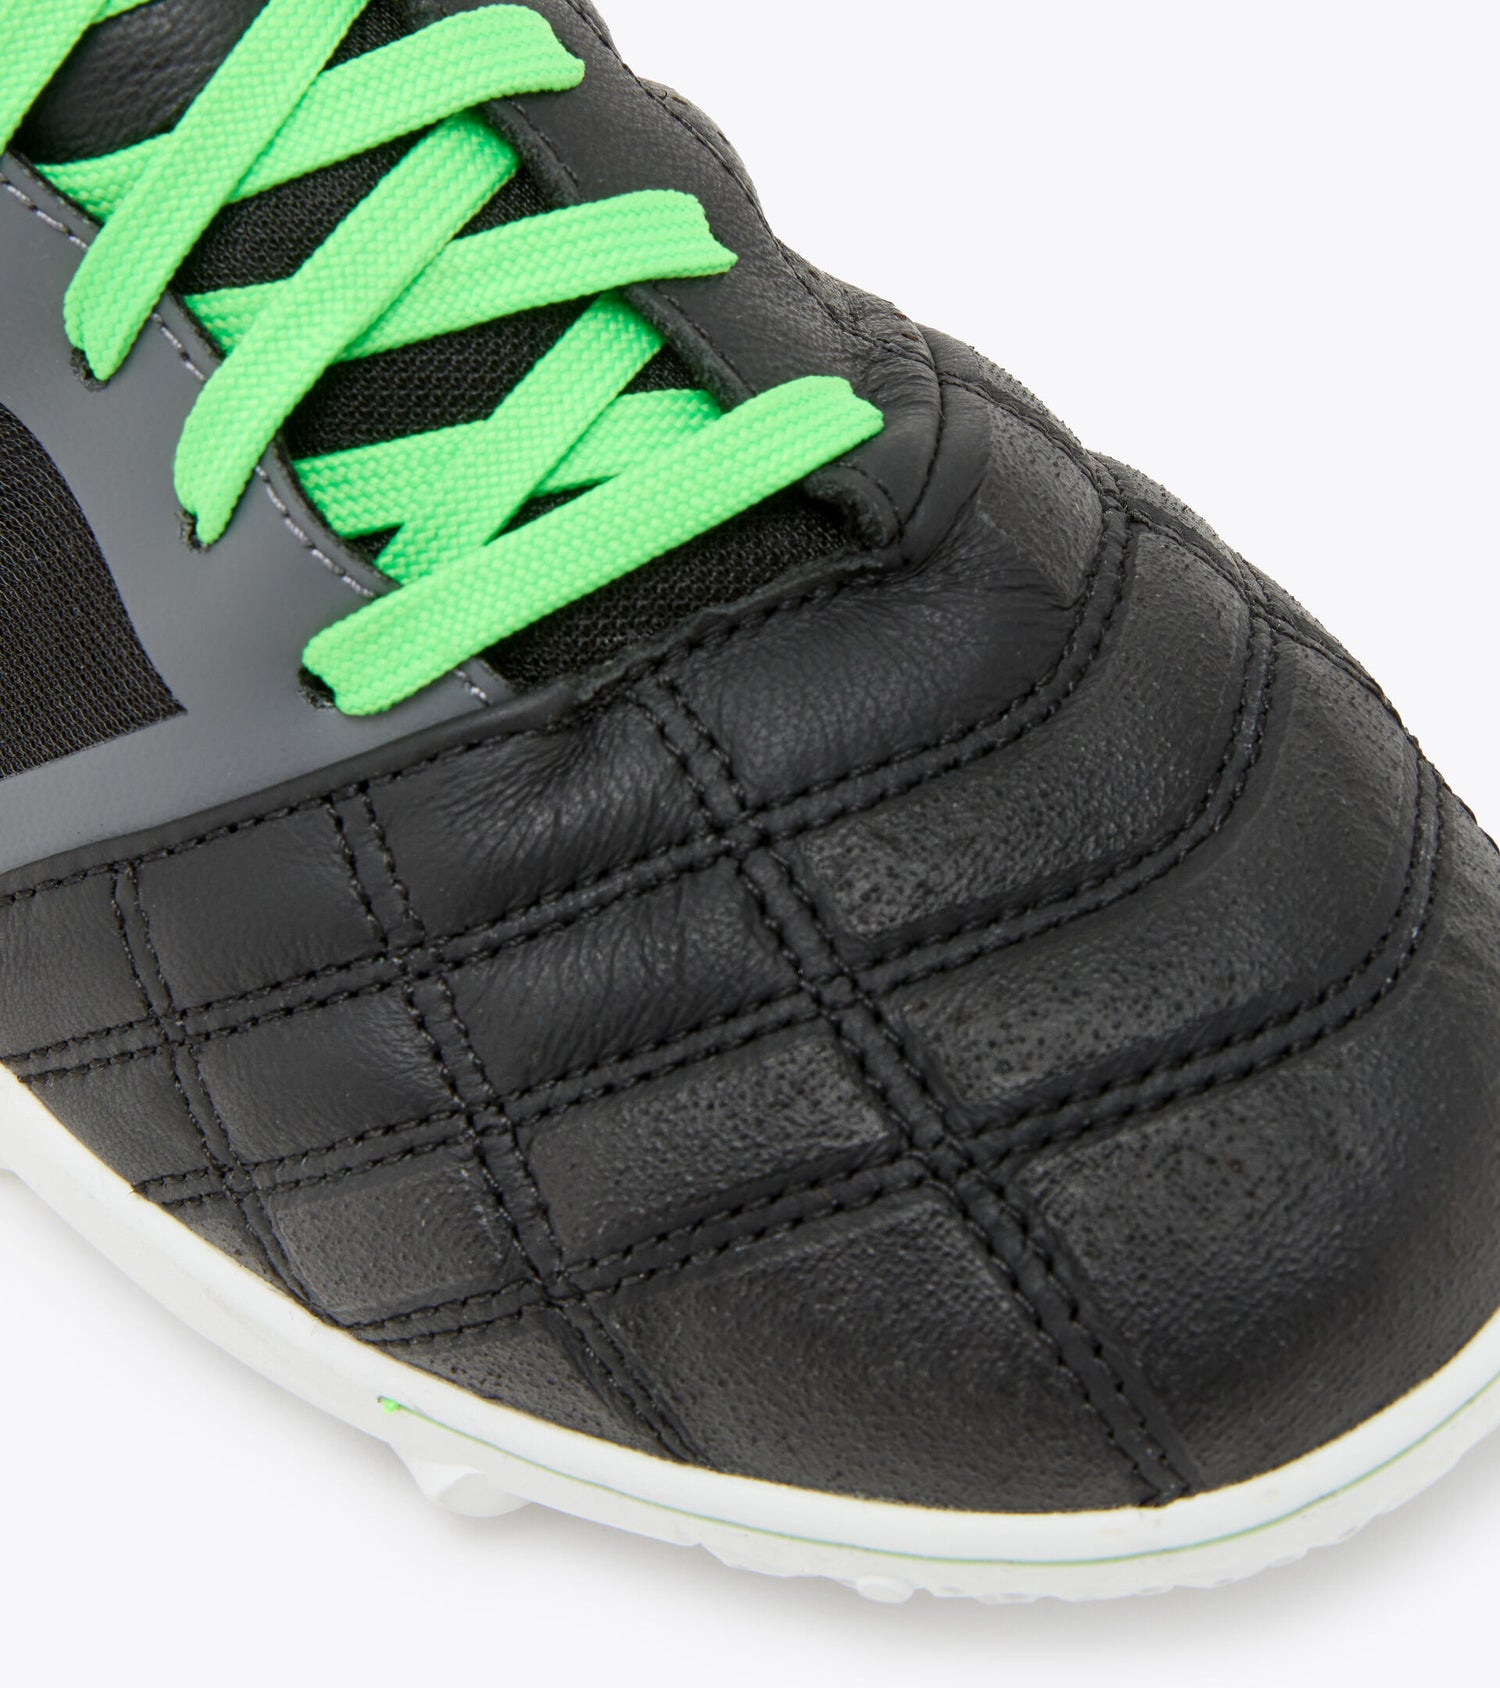 Diadora Brazil Sala TF Turf Soccer Shoe - Black/Green Fluo